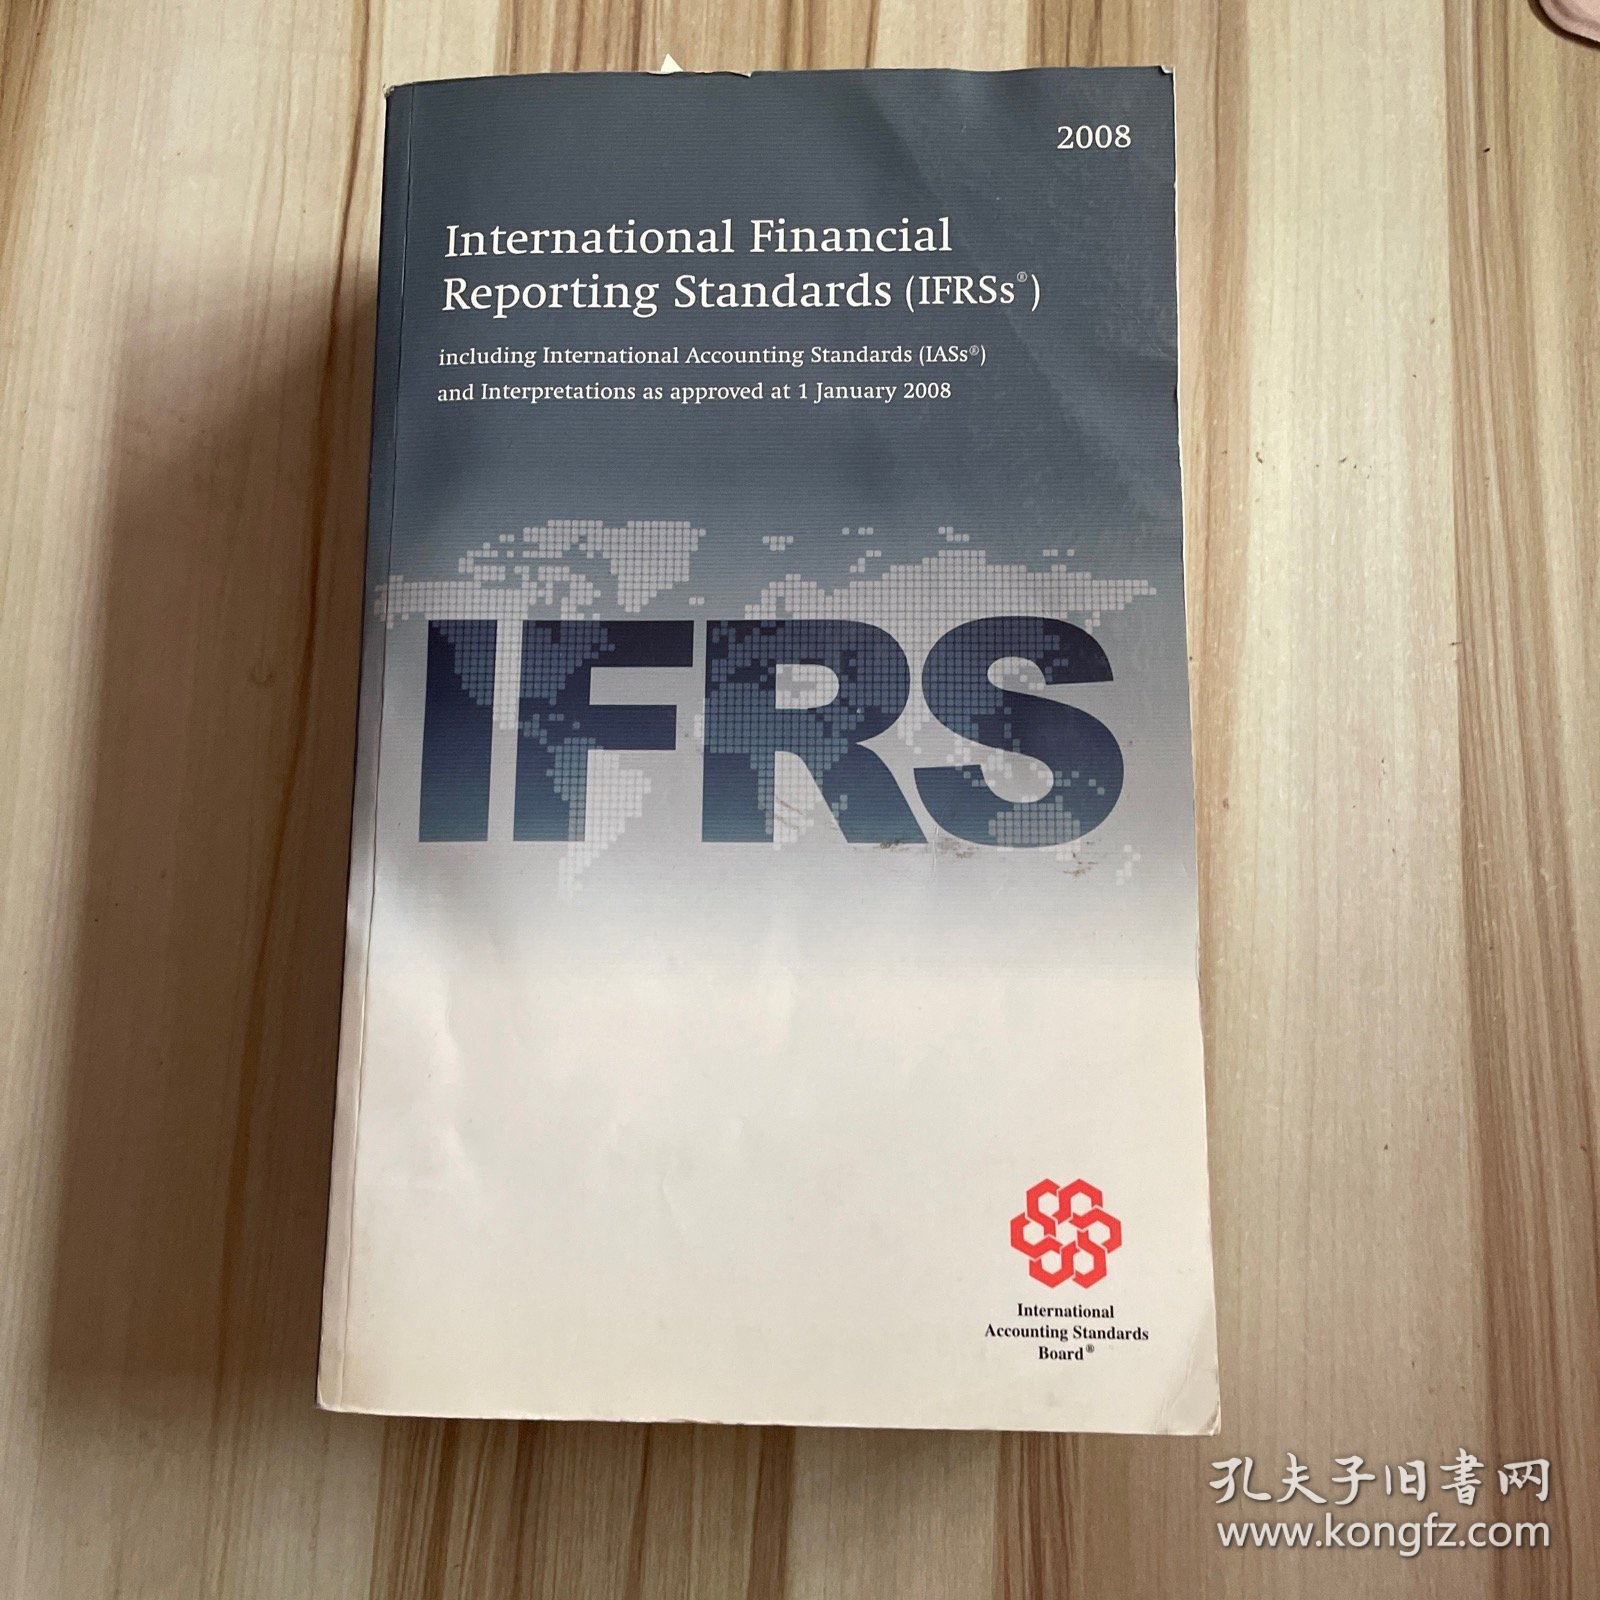 International Financial Reporting Standards (IFRSs) 2008